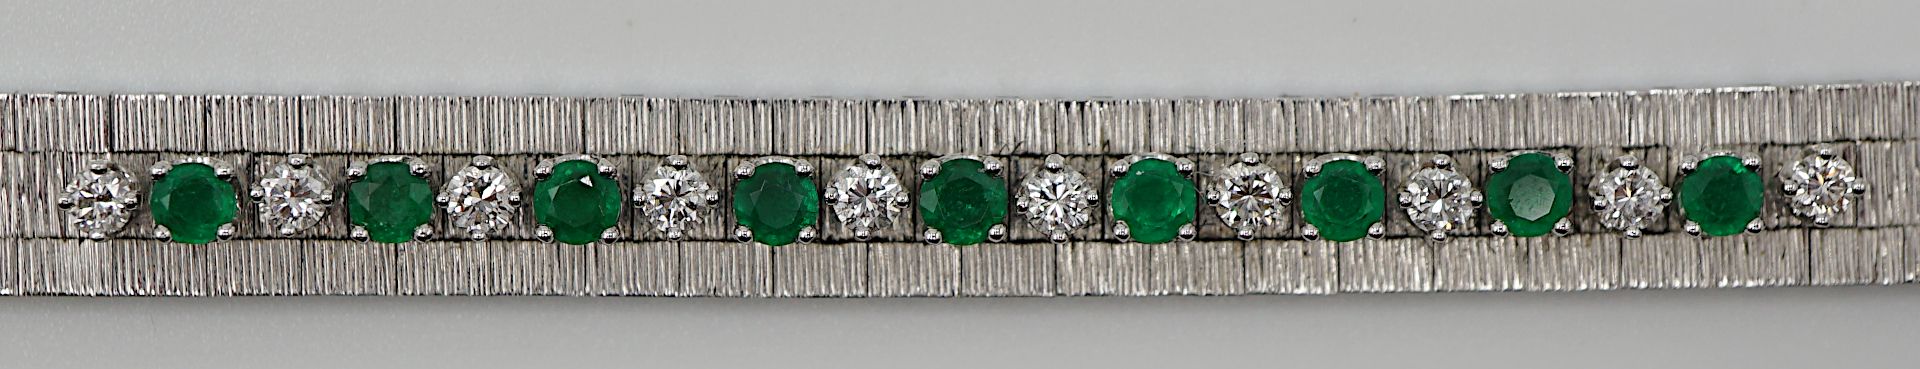 1 Damenarmband WG 18ct. lt. Kopie der Expertise von Juw. SCHOTT 1974: 9 Smaragde zus. 0,87ct., 10 Br - Image 2 of 2